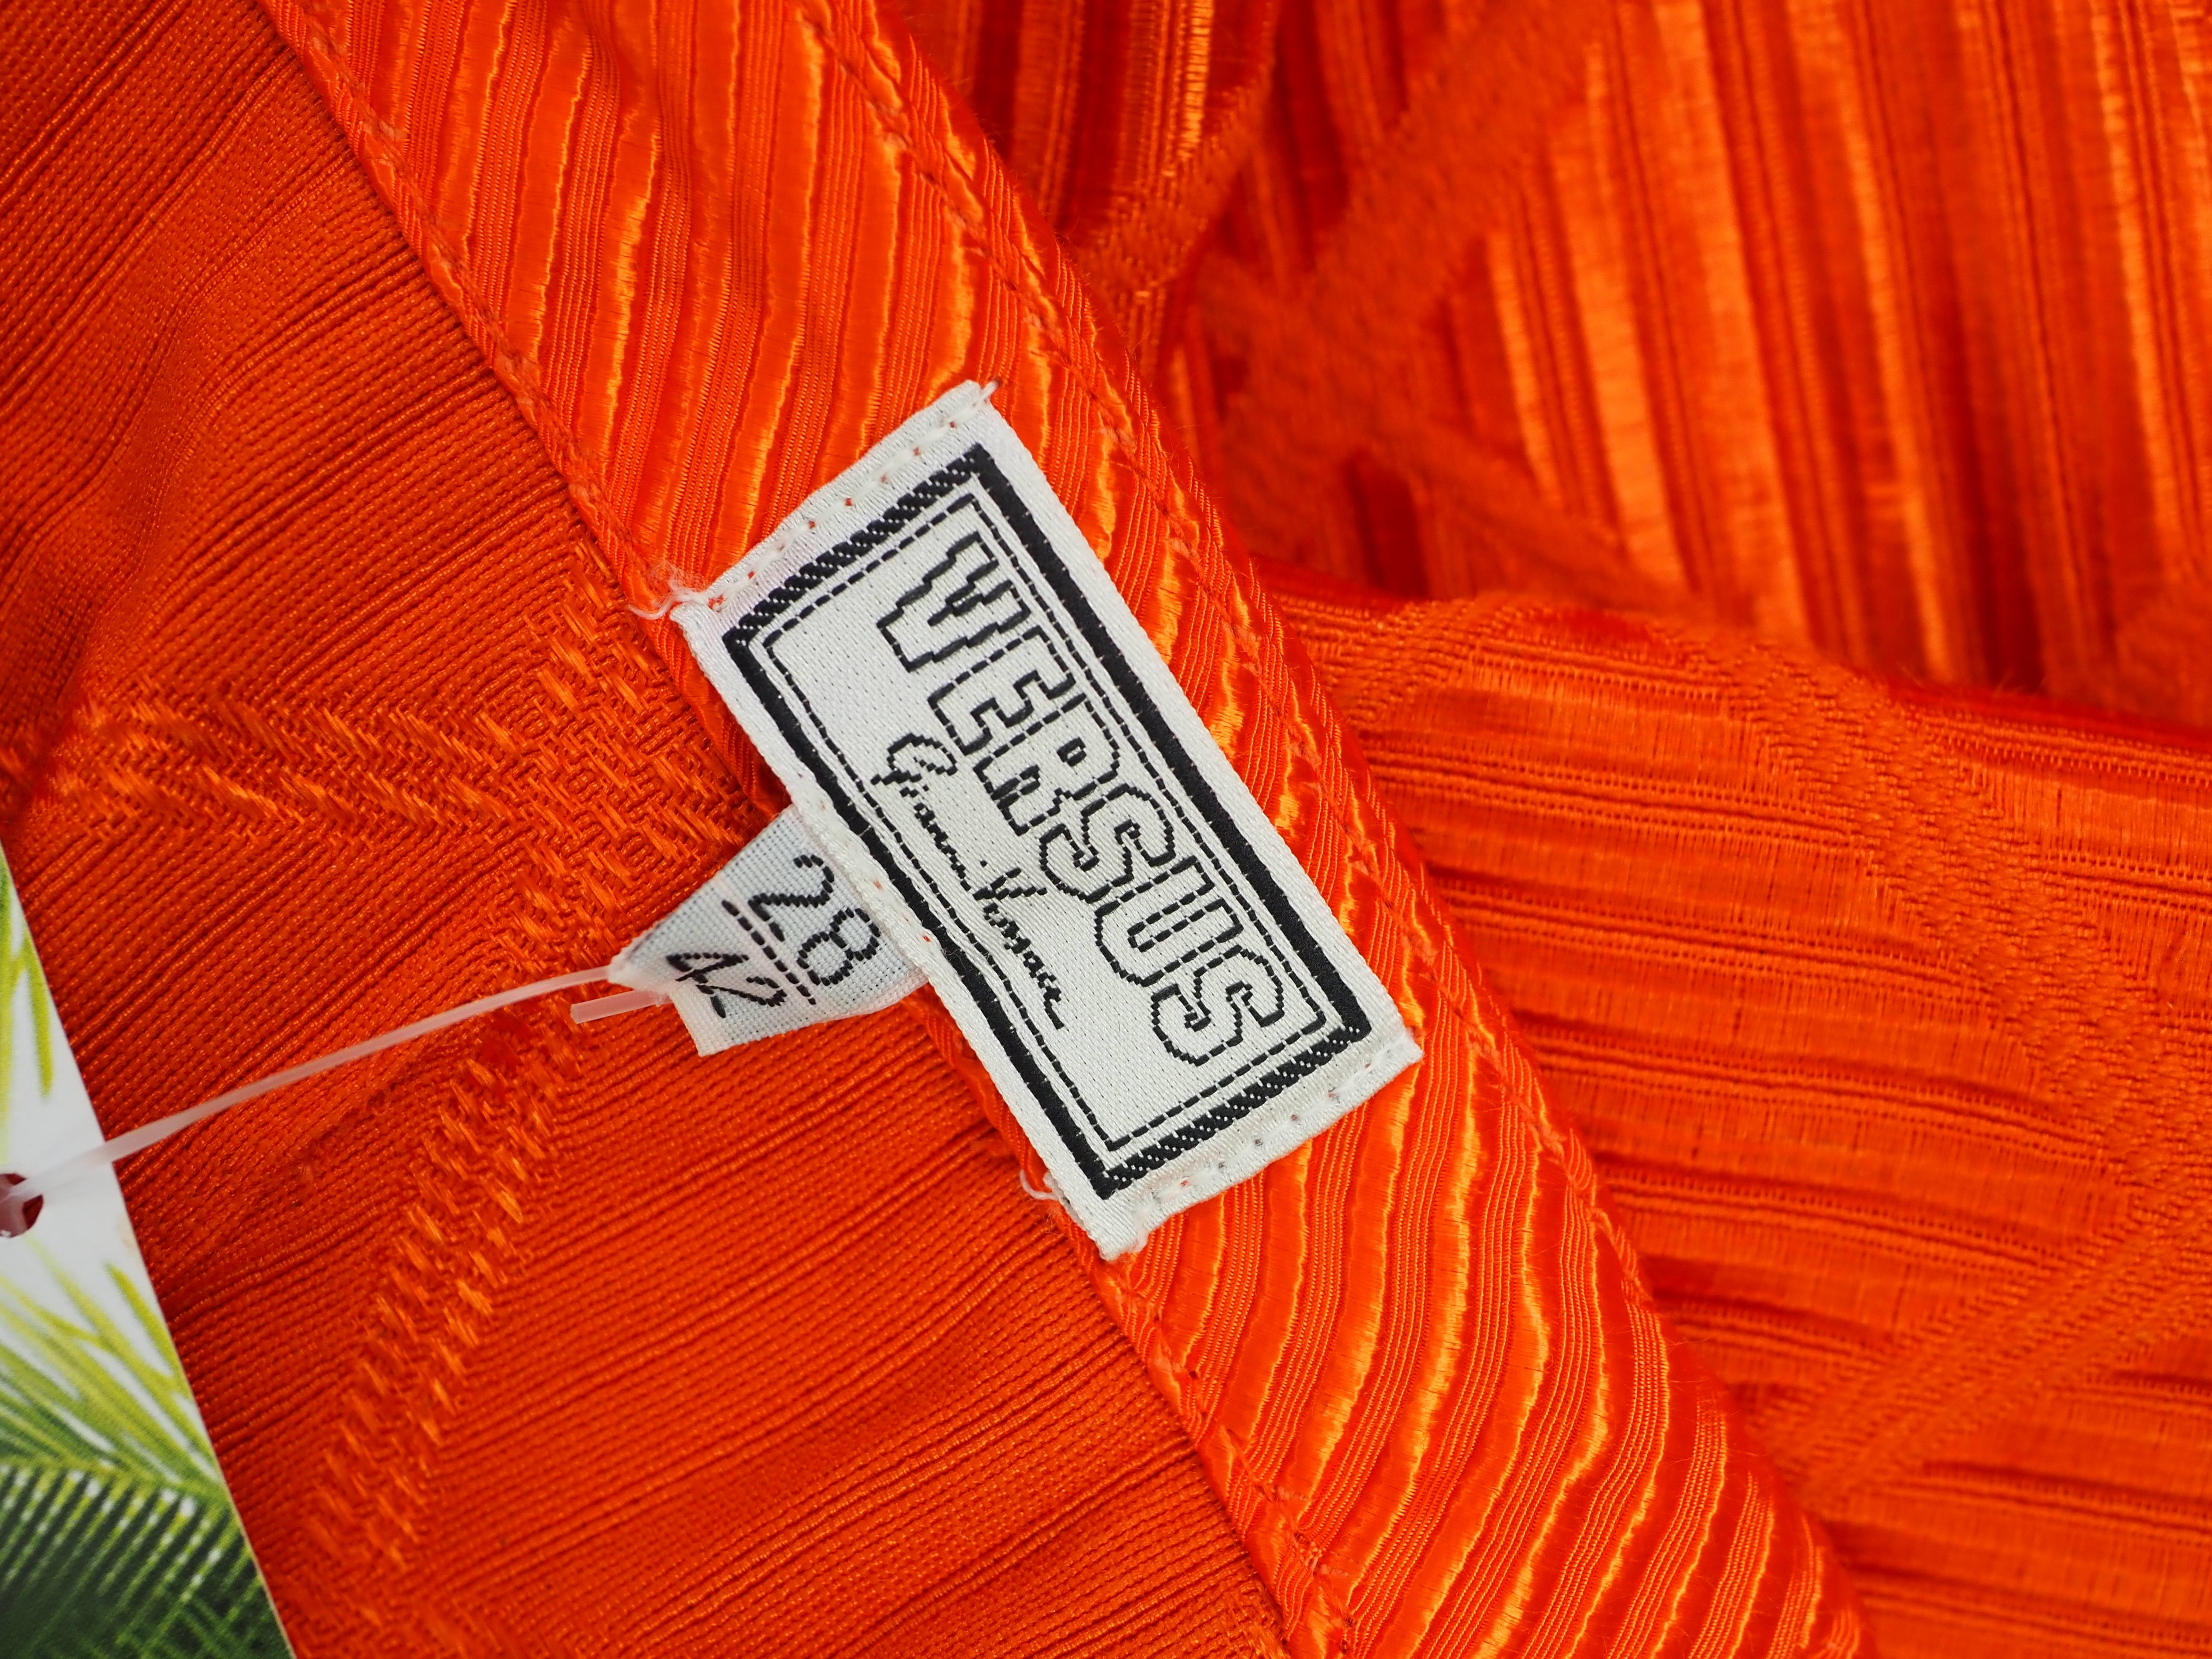 Versus by Gianni Versace orange dress 6